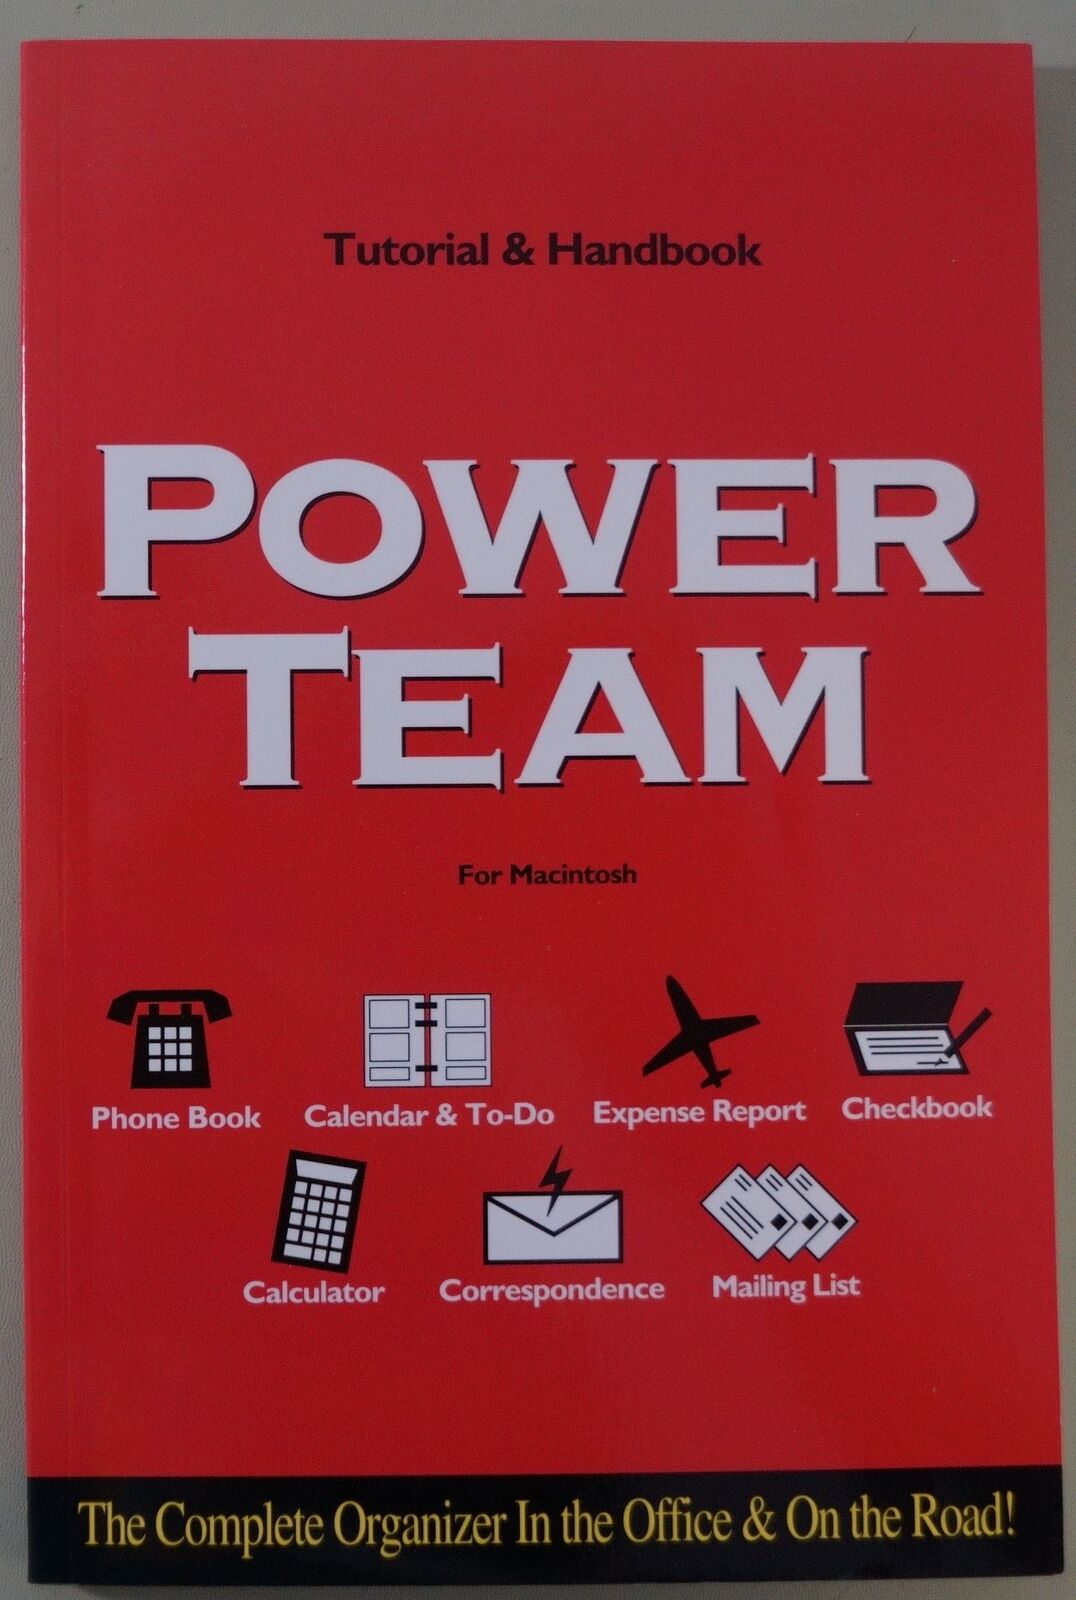 ProVue Development - Power Team V.1 for Macintosh - Tutorial & Handbook - 1992